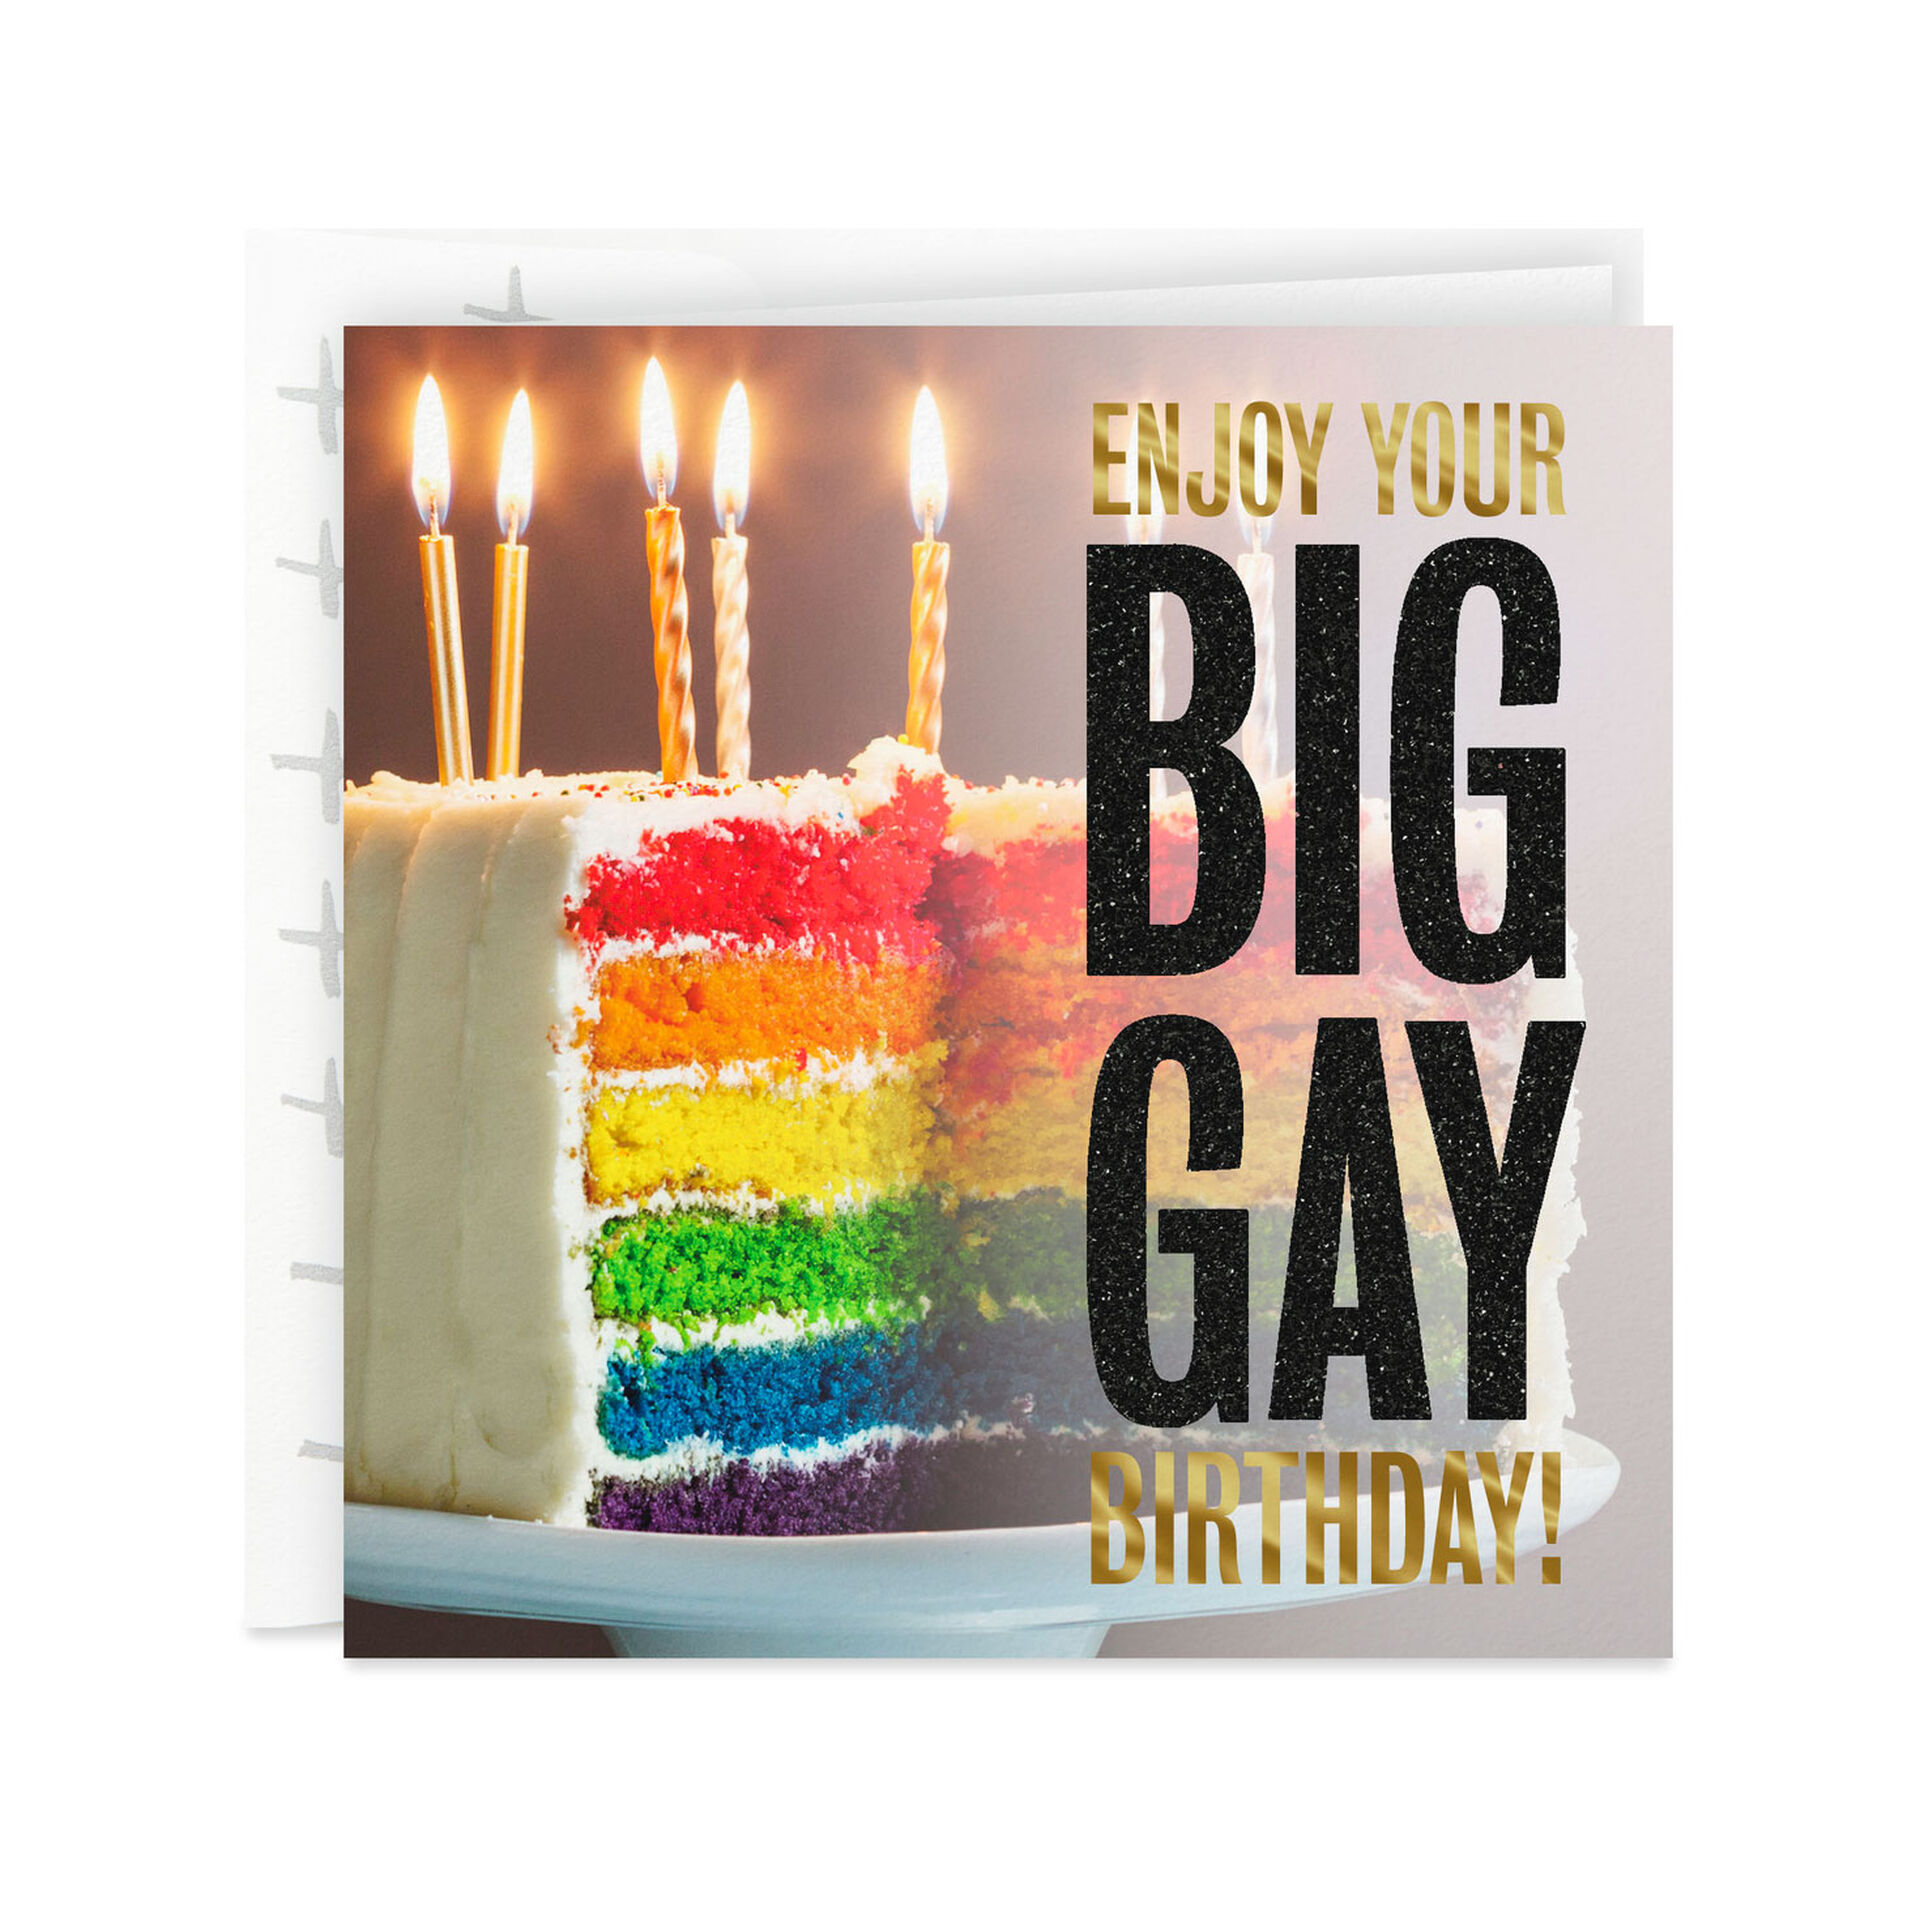 Big Gay Cake With Candles Birthday Card - Greeting Cards - Hallmark